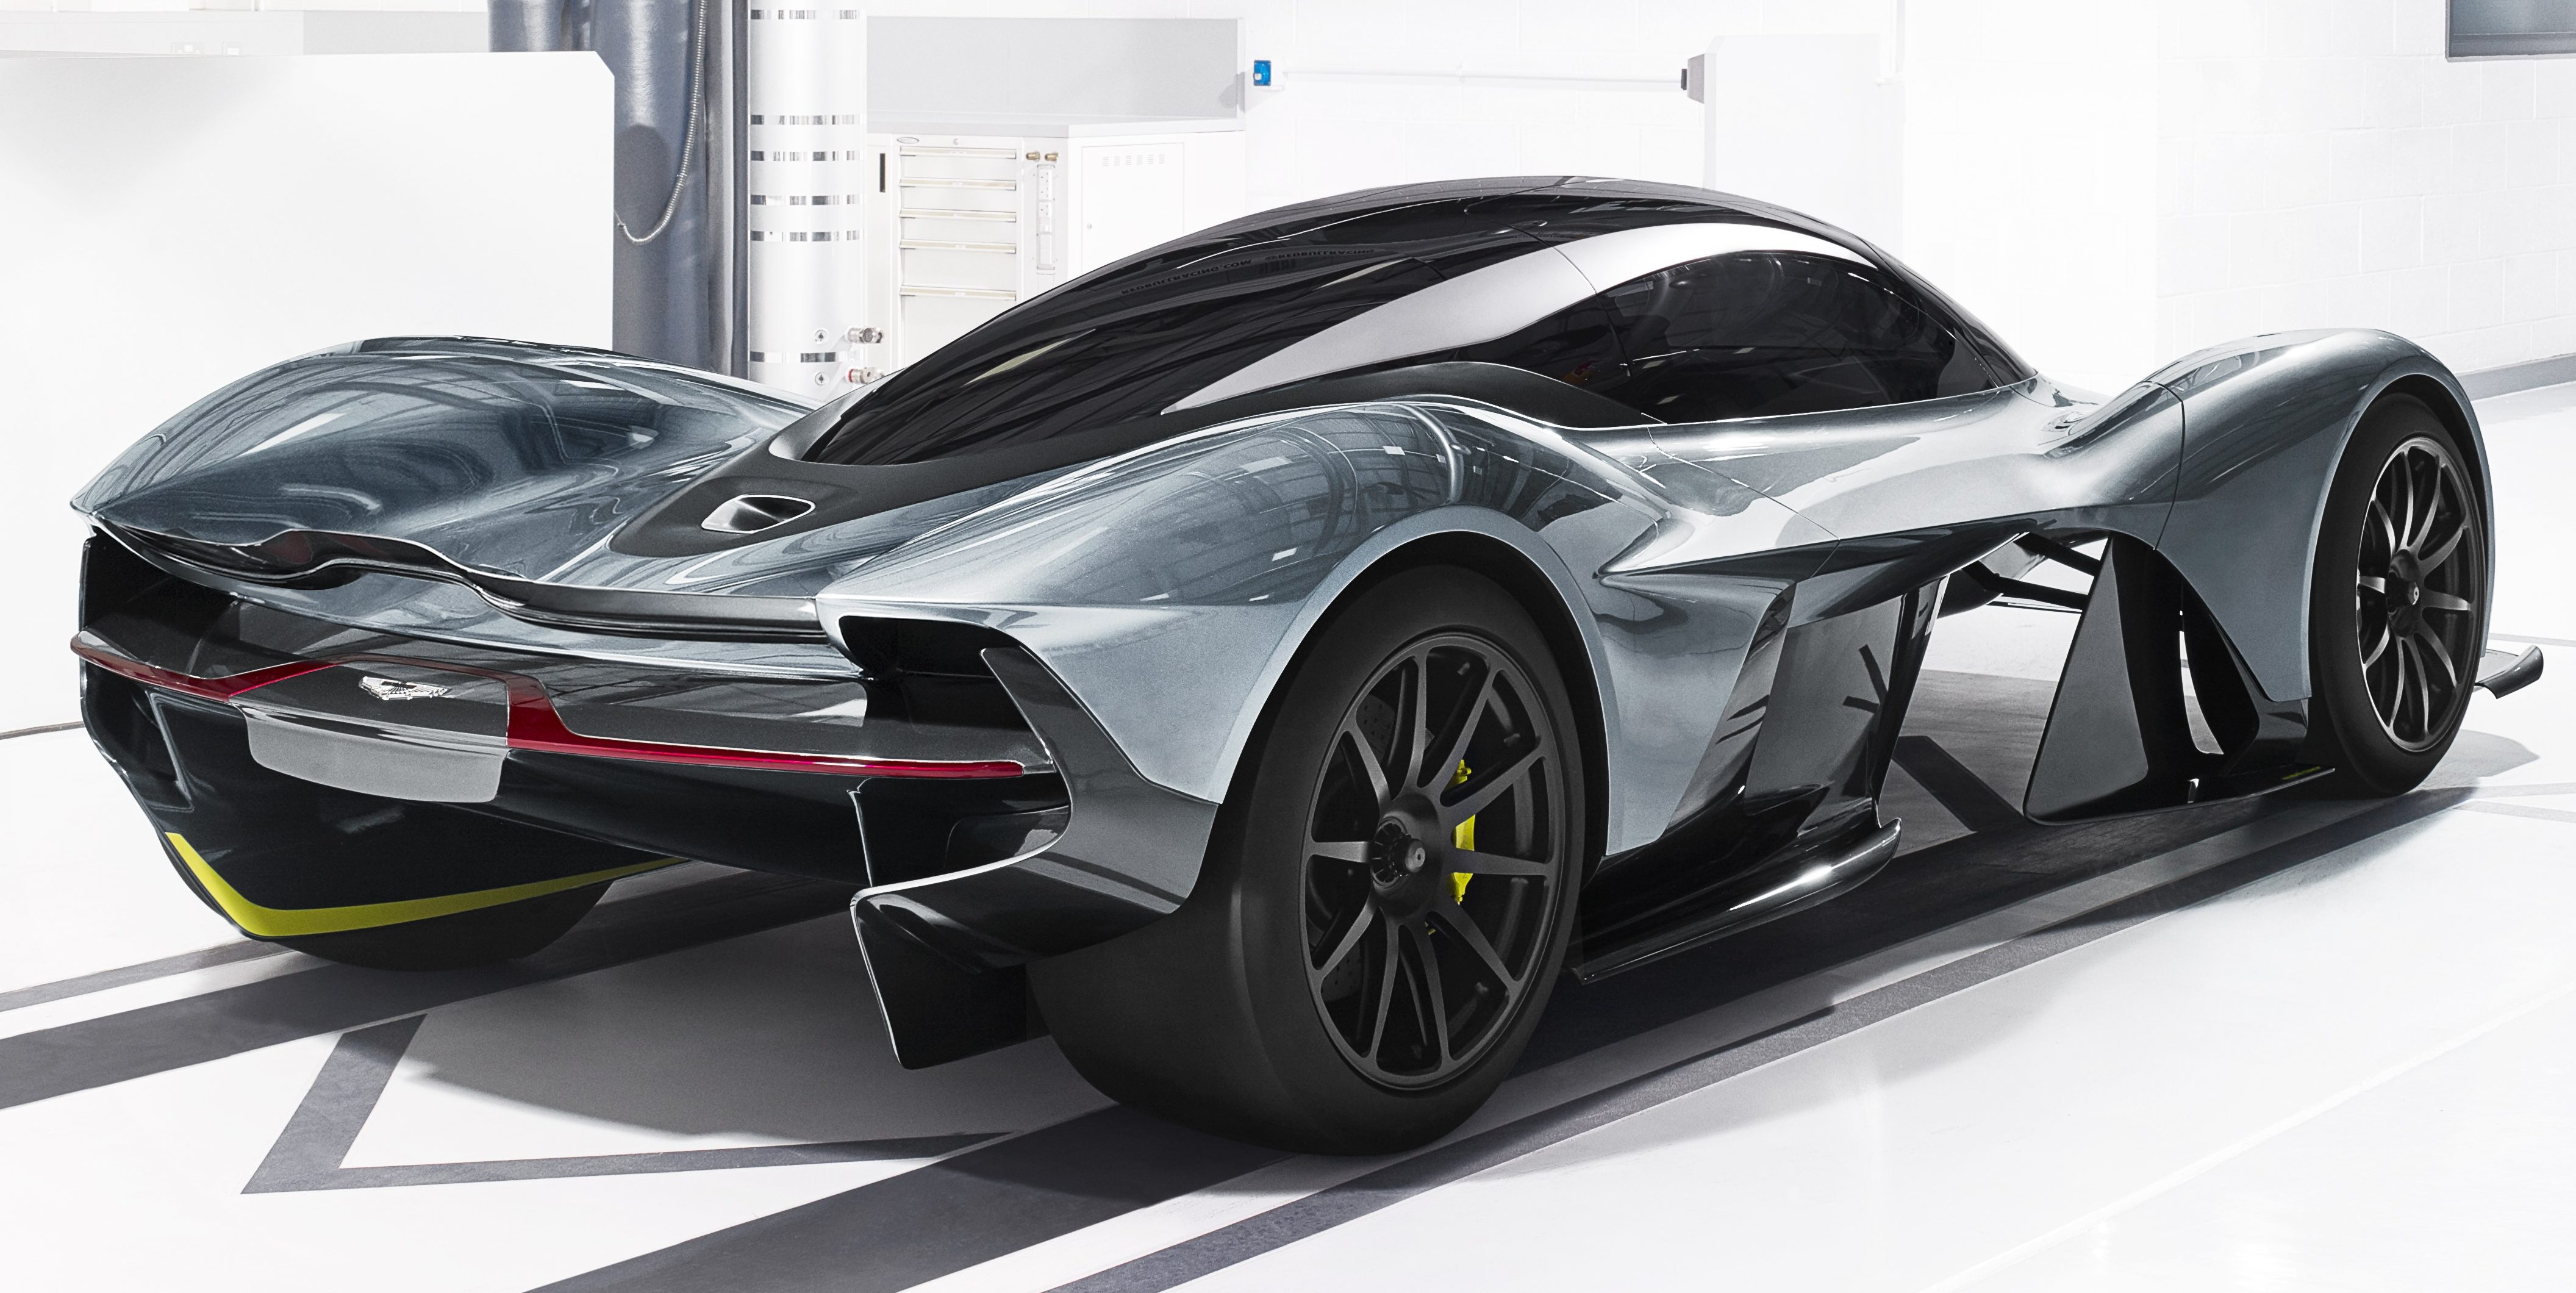 Revolutionary Luxury: The Aston Martin AM RB 001 Concept